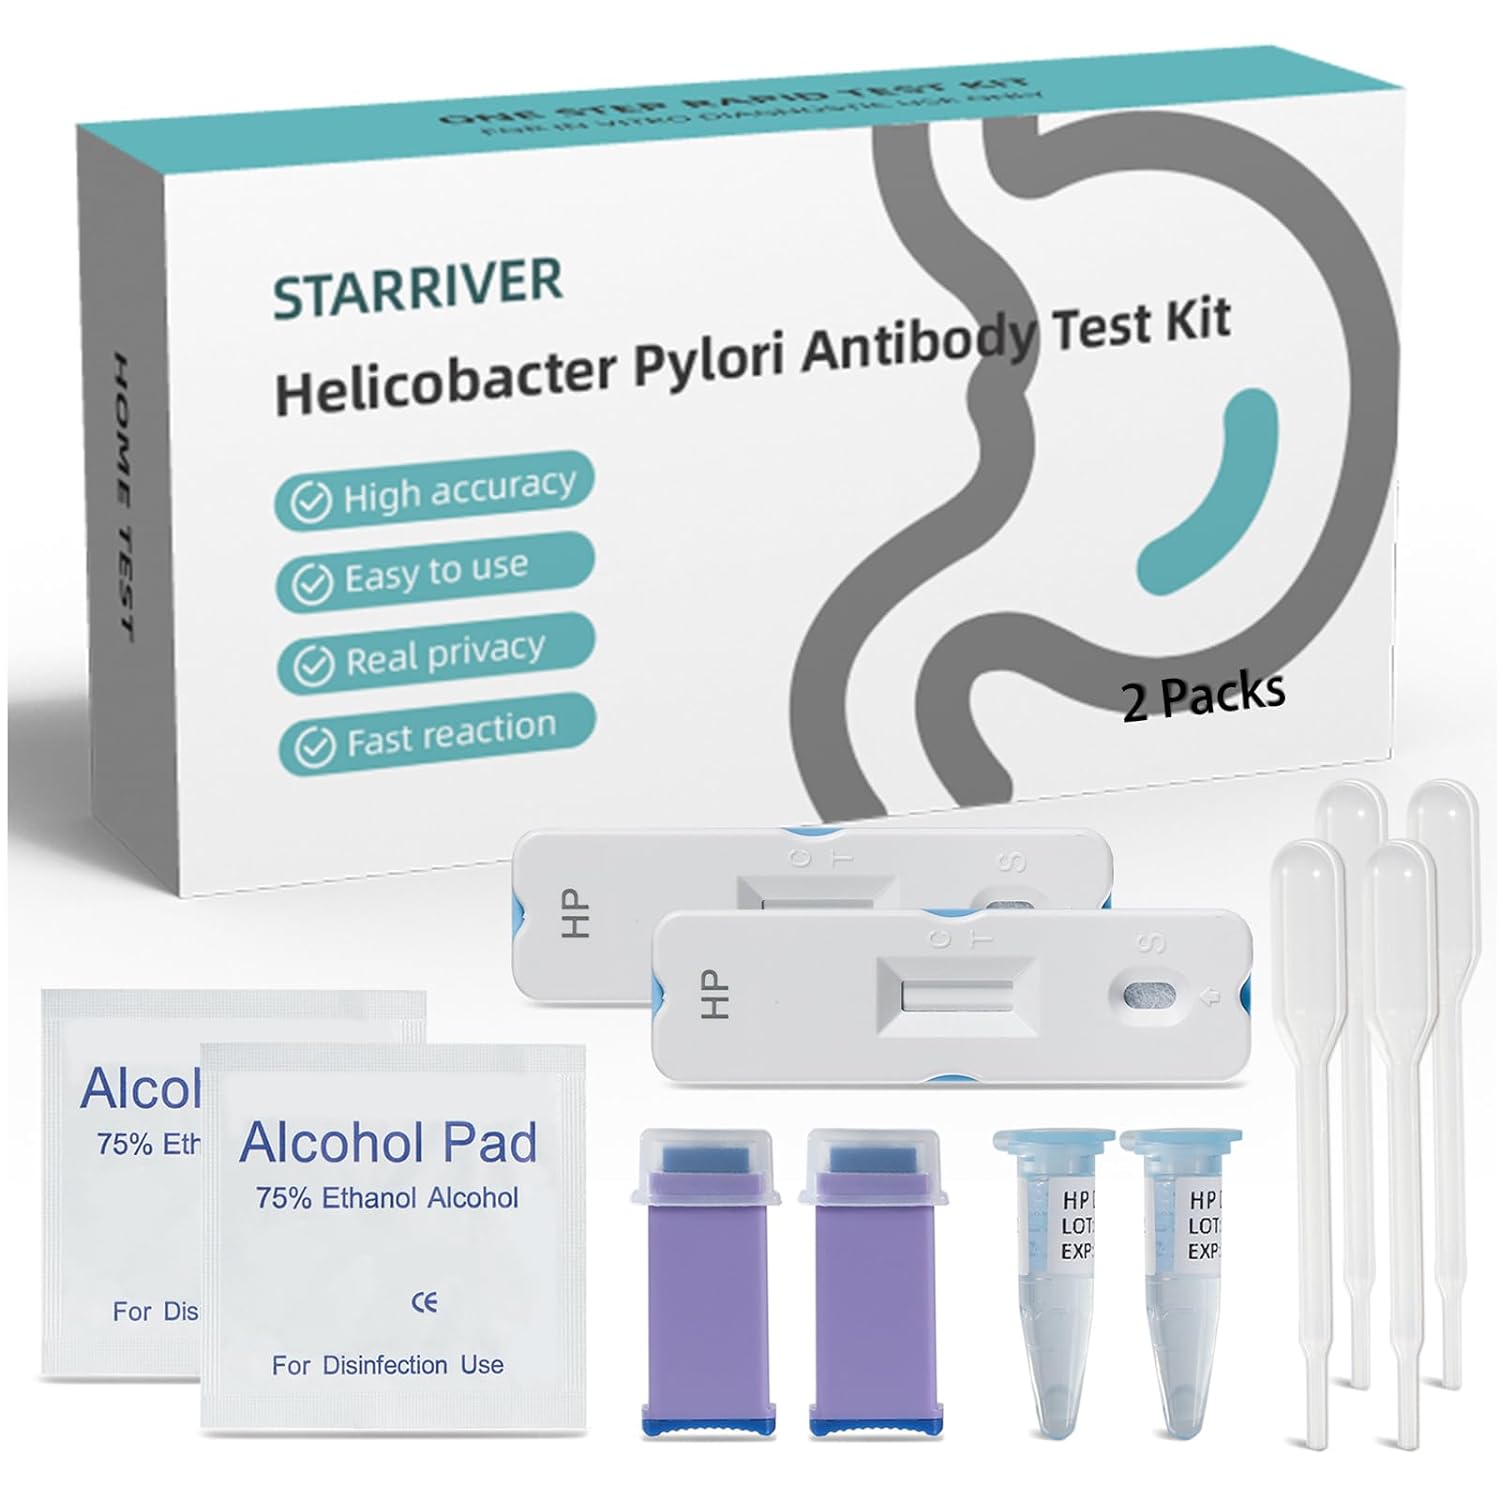 STARRIVER H Pylori Test Kit review